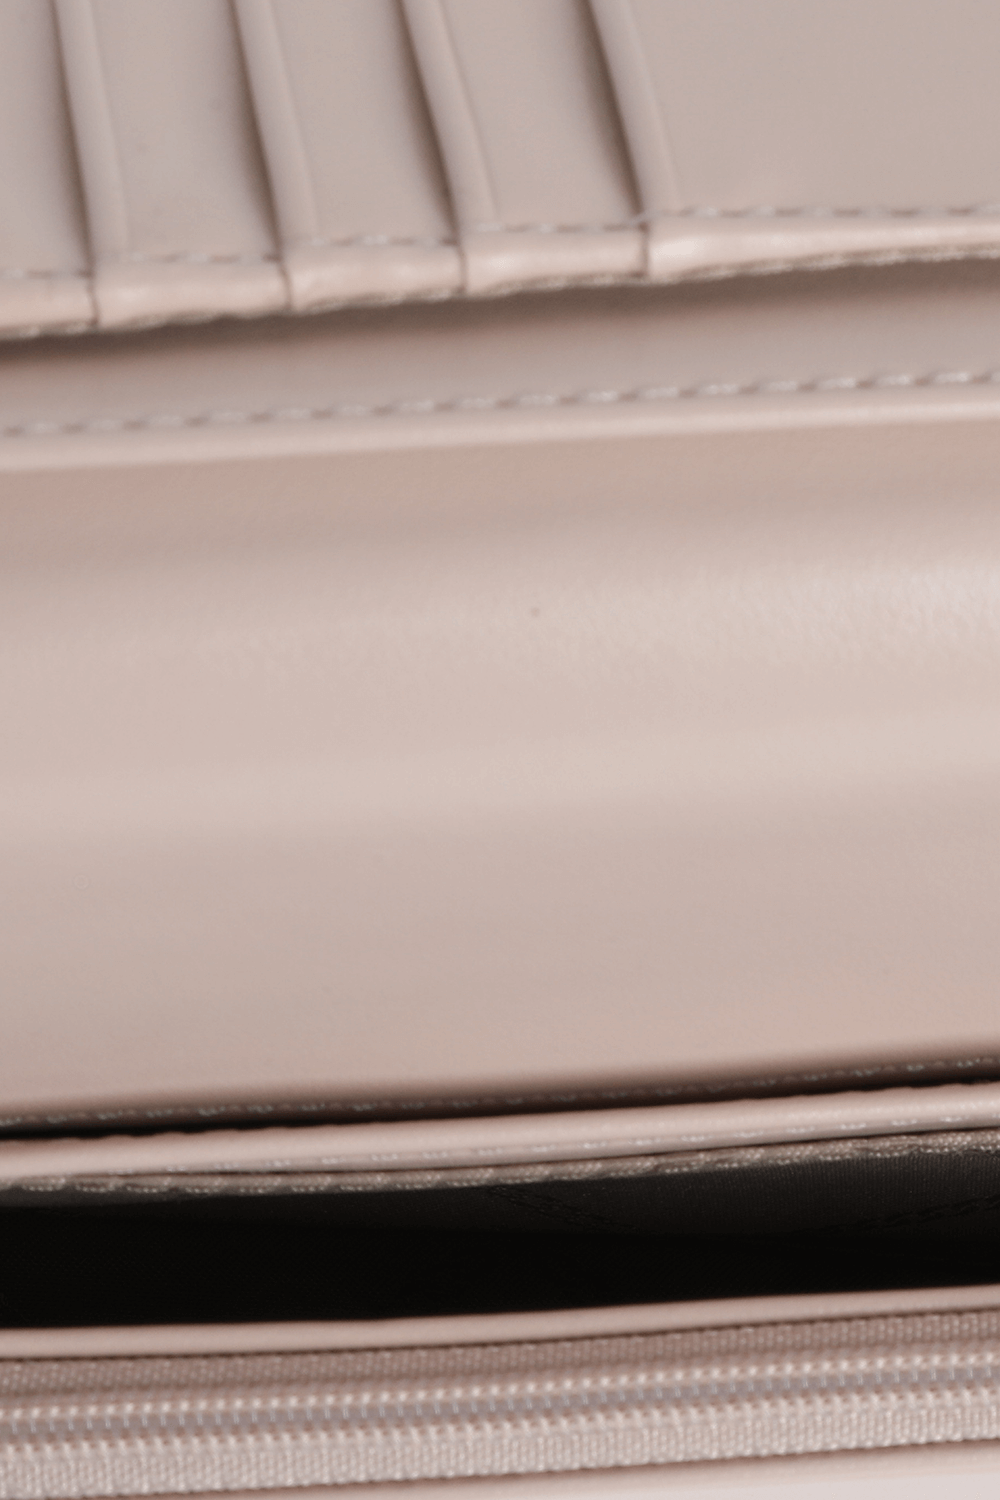 Jet Set SM Leather Smartphone Crossbody Bag in Soft Pink MICHAEL KORS